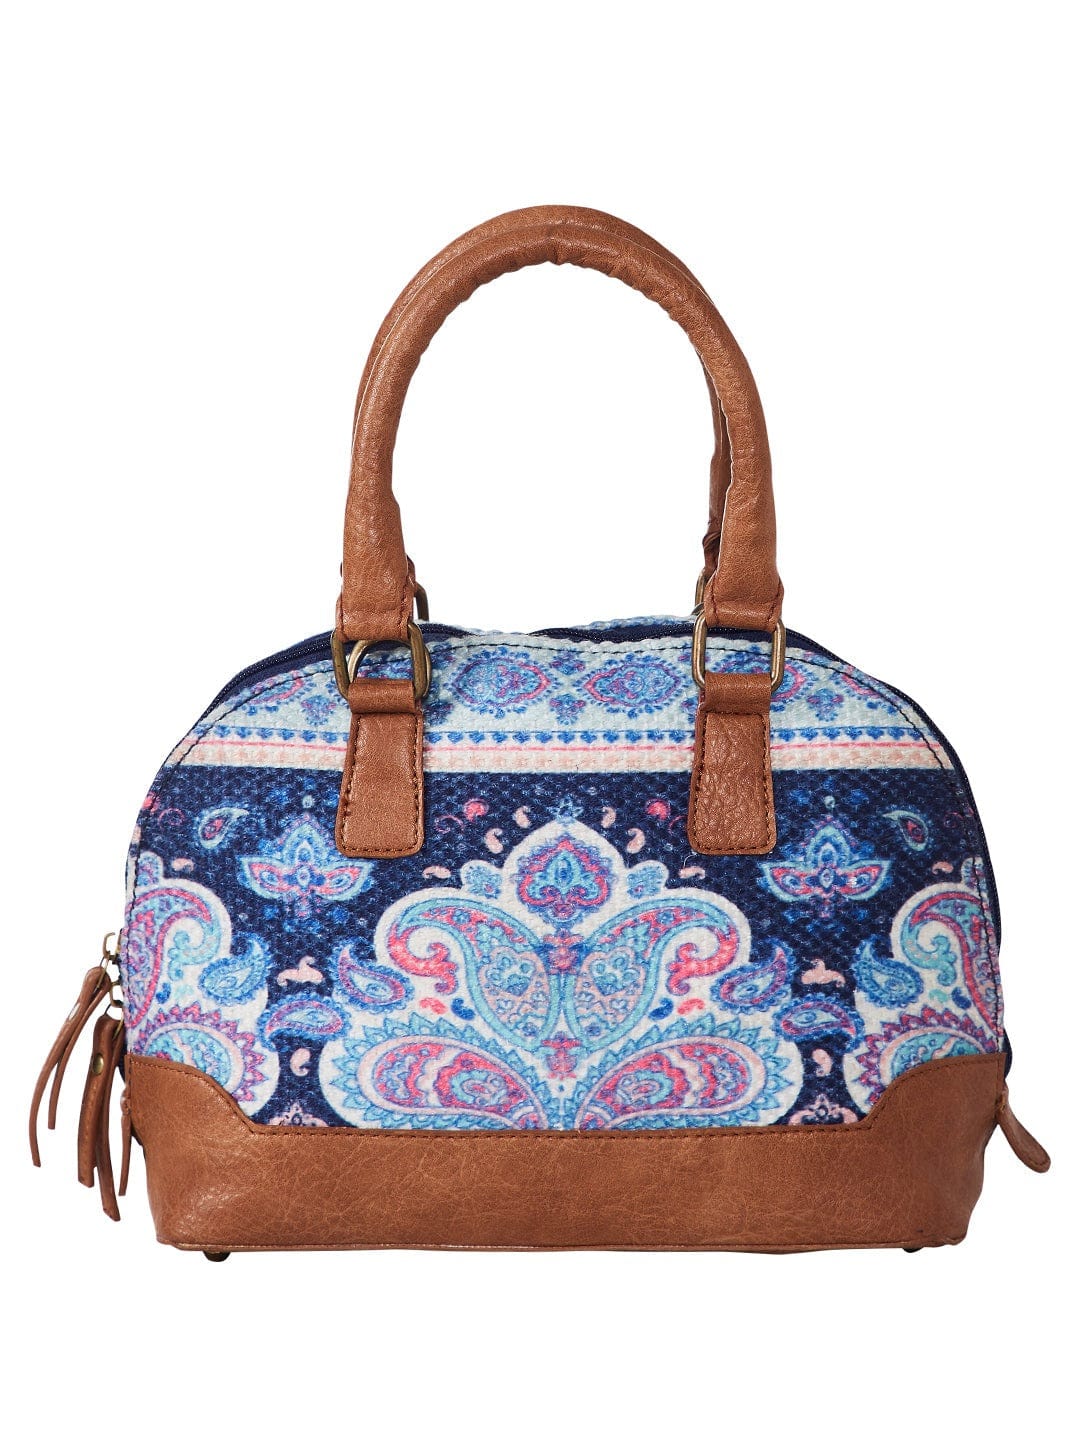 Mona-B Bag Mona B Canvas Samll Vintage Handbag, Shoulder Bags For Shopping Travel With Stylish Design For Women (Multicolor, Kilim) - M-7008